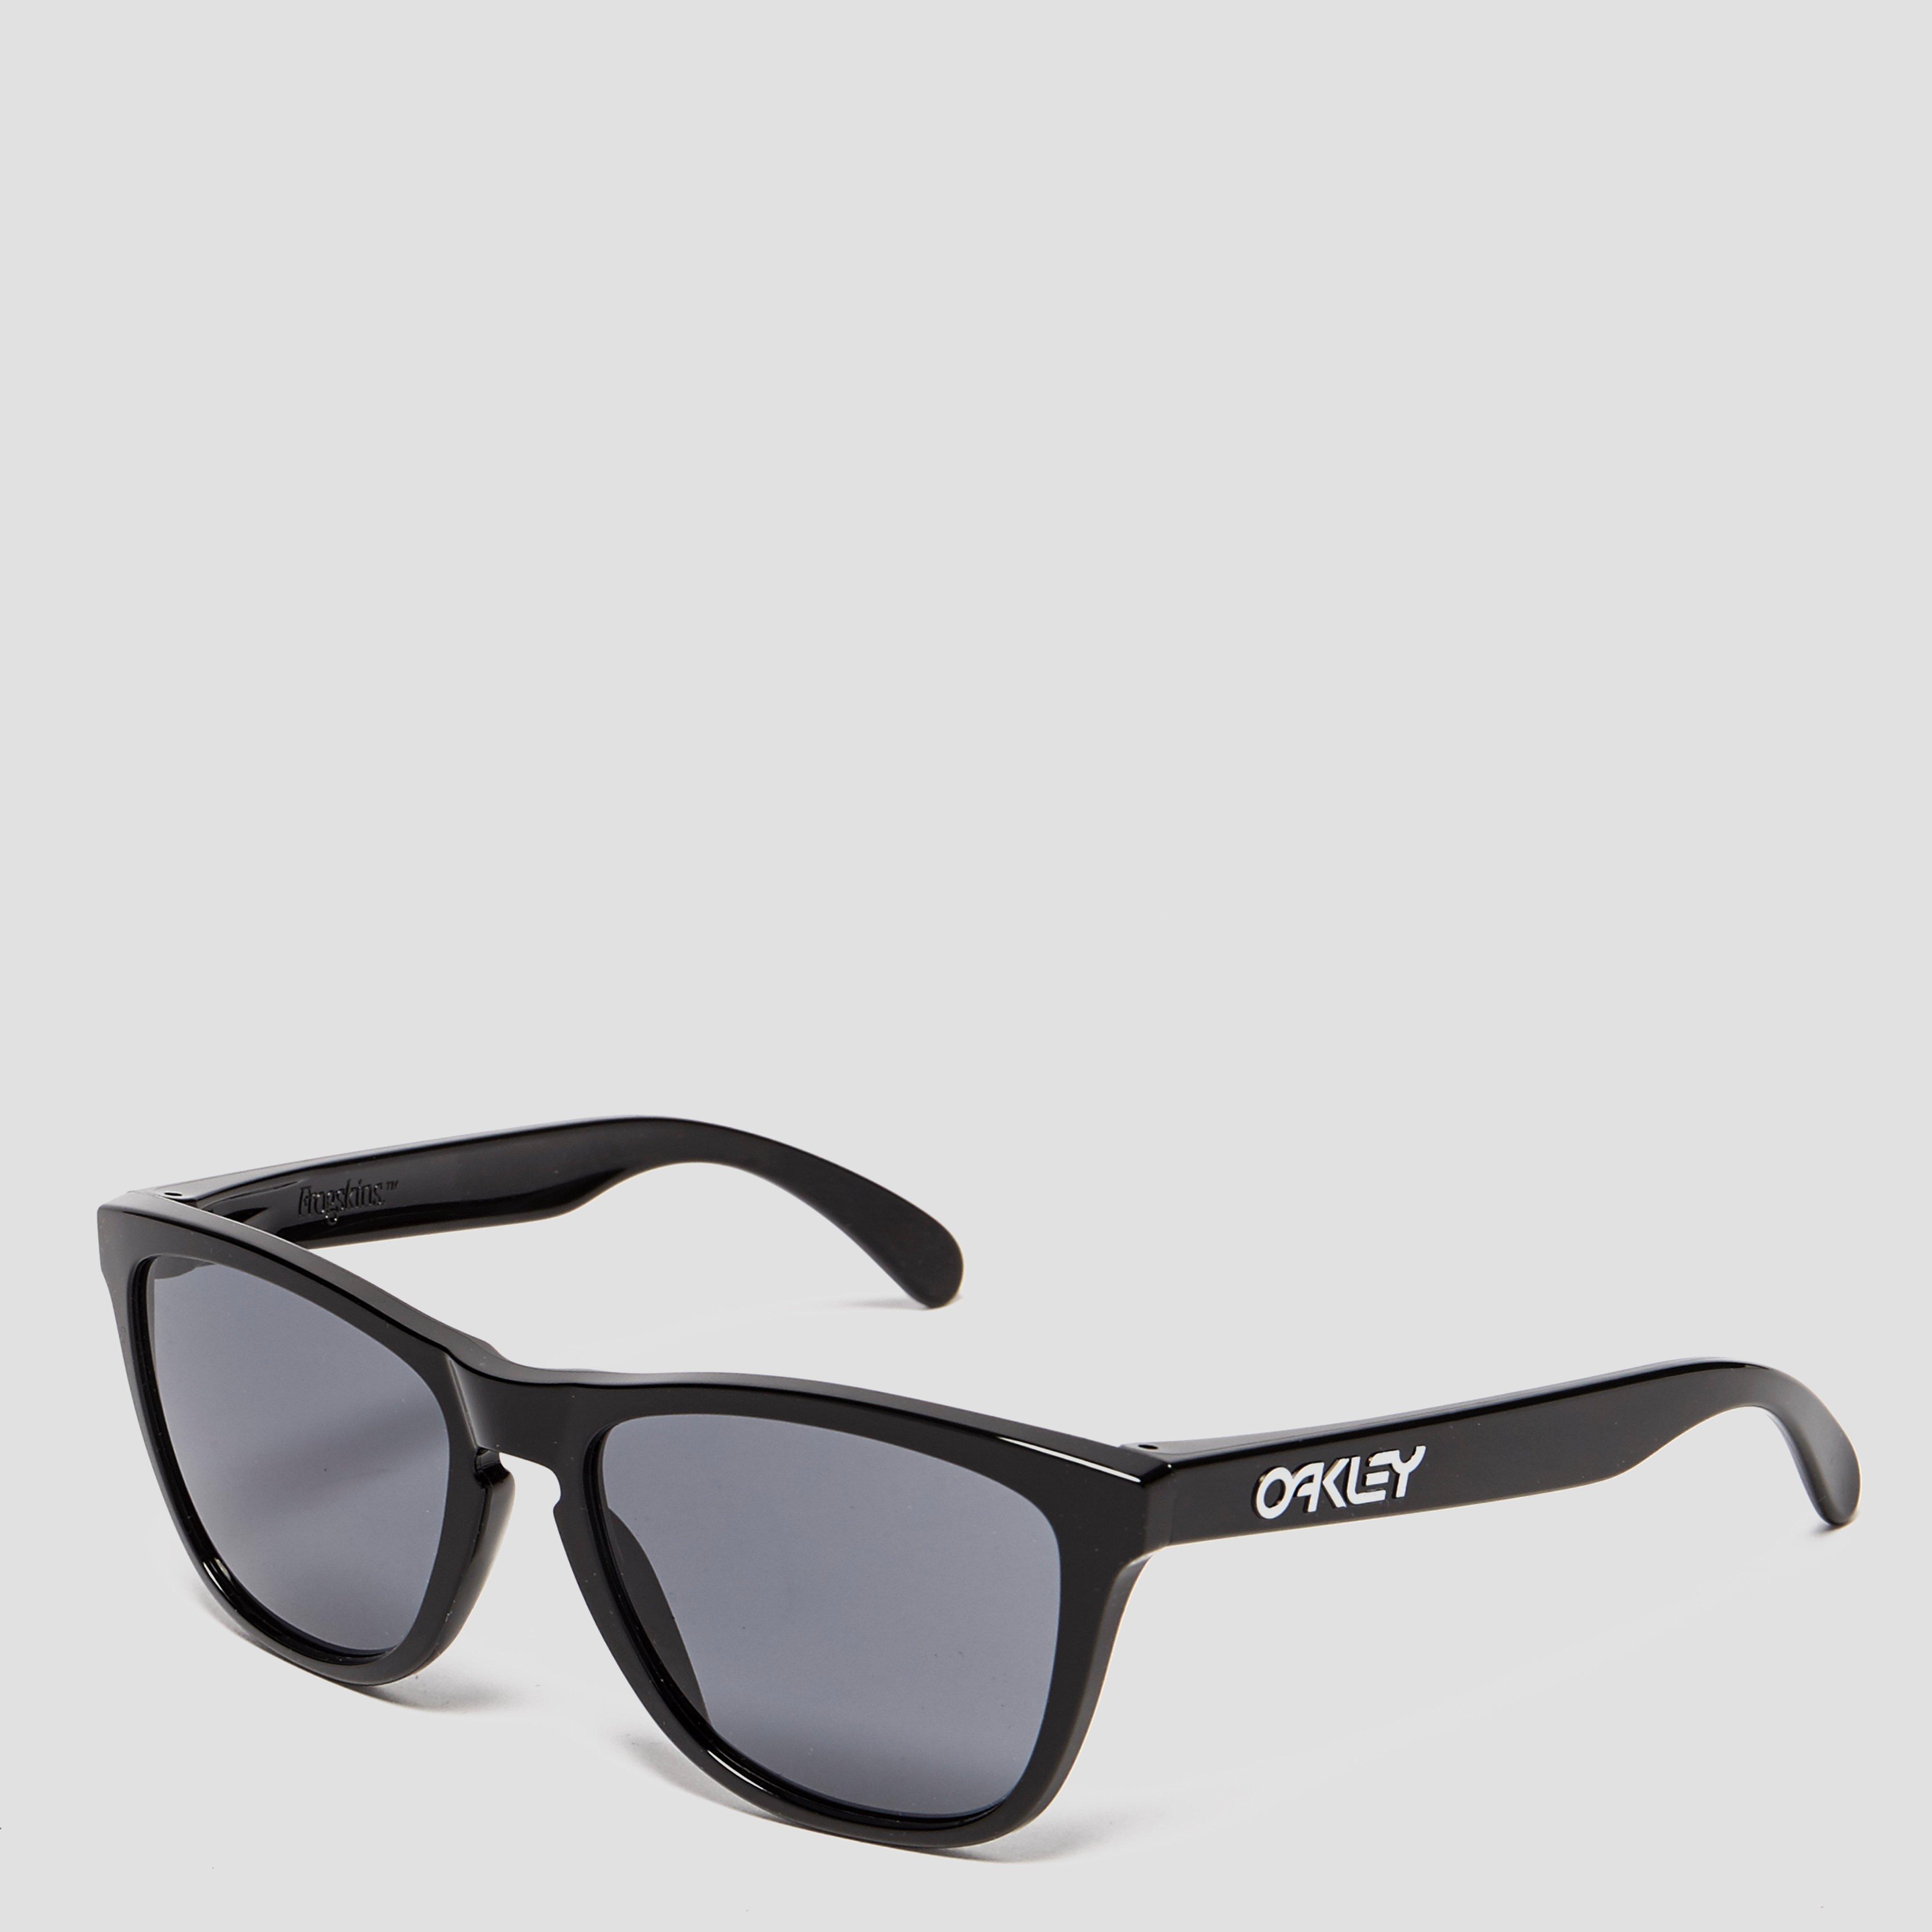  Oakley Frogskins   Sunglasses, Black